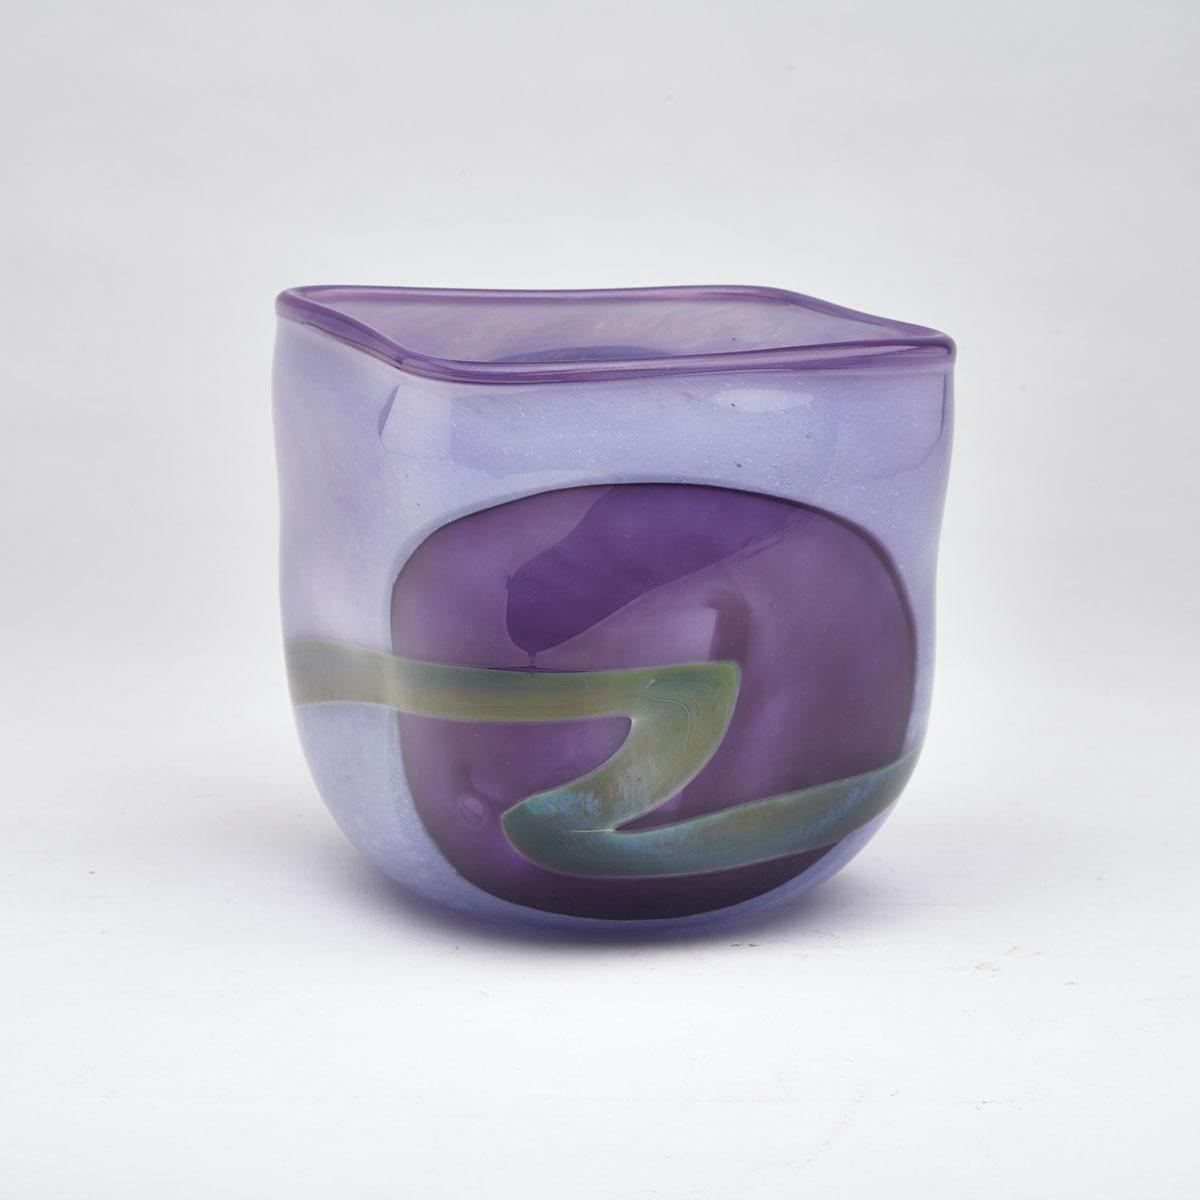 David New-Small (American-Canadian, b.1945), Glass Vase, 1992